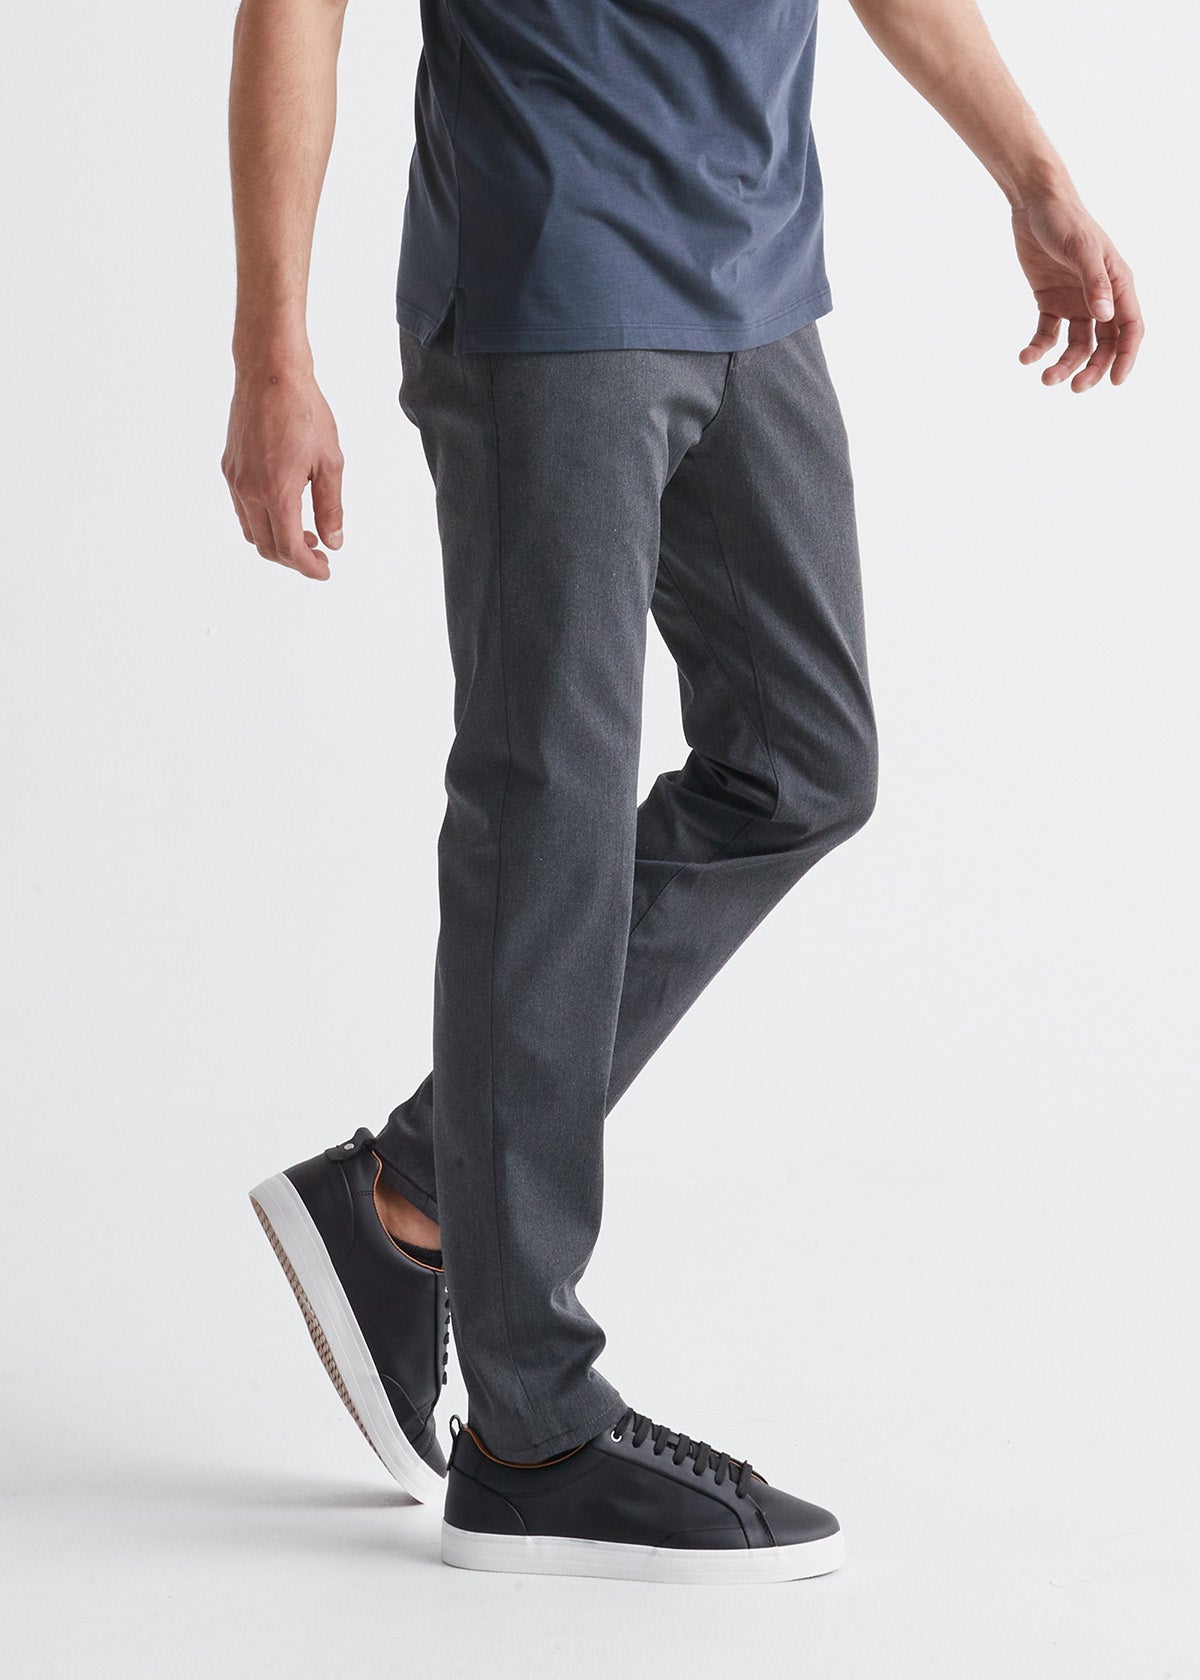 Men's Charcoal Slim Fit Stretch Dress Pant